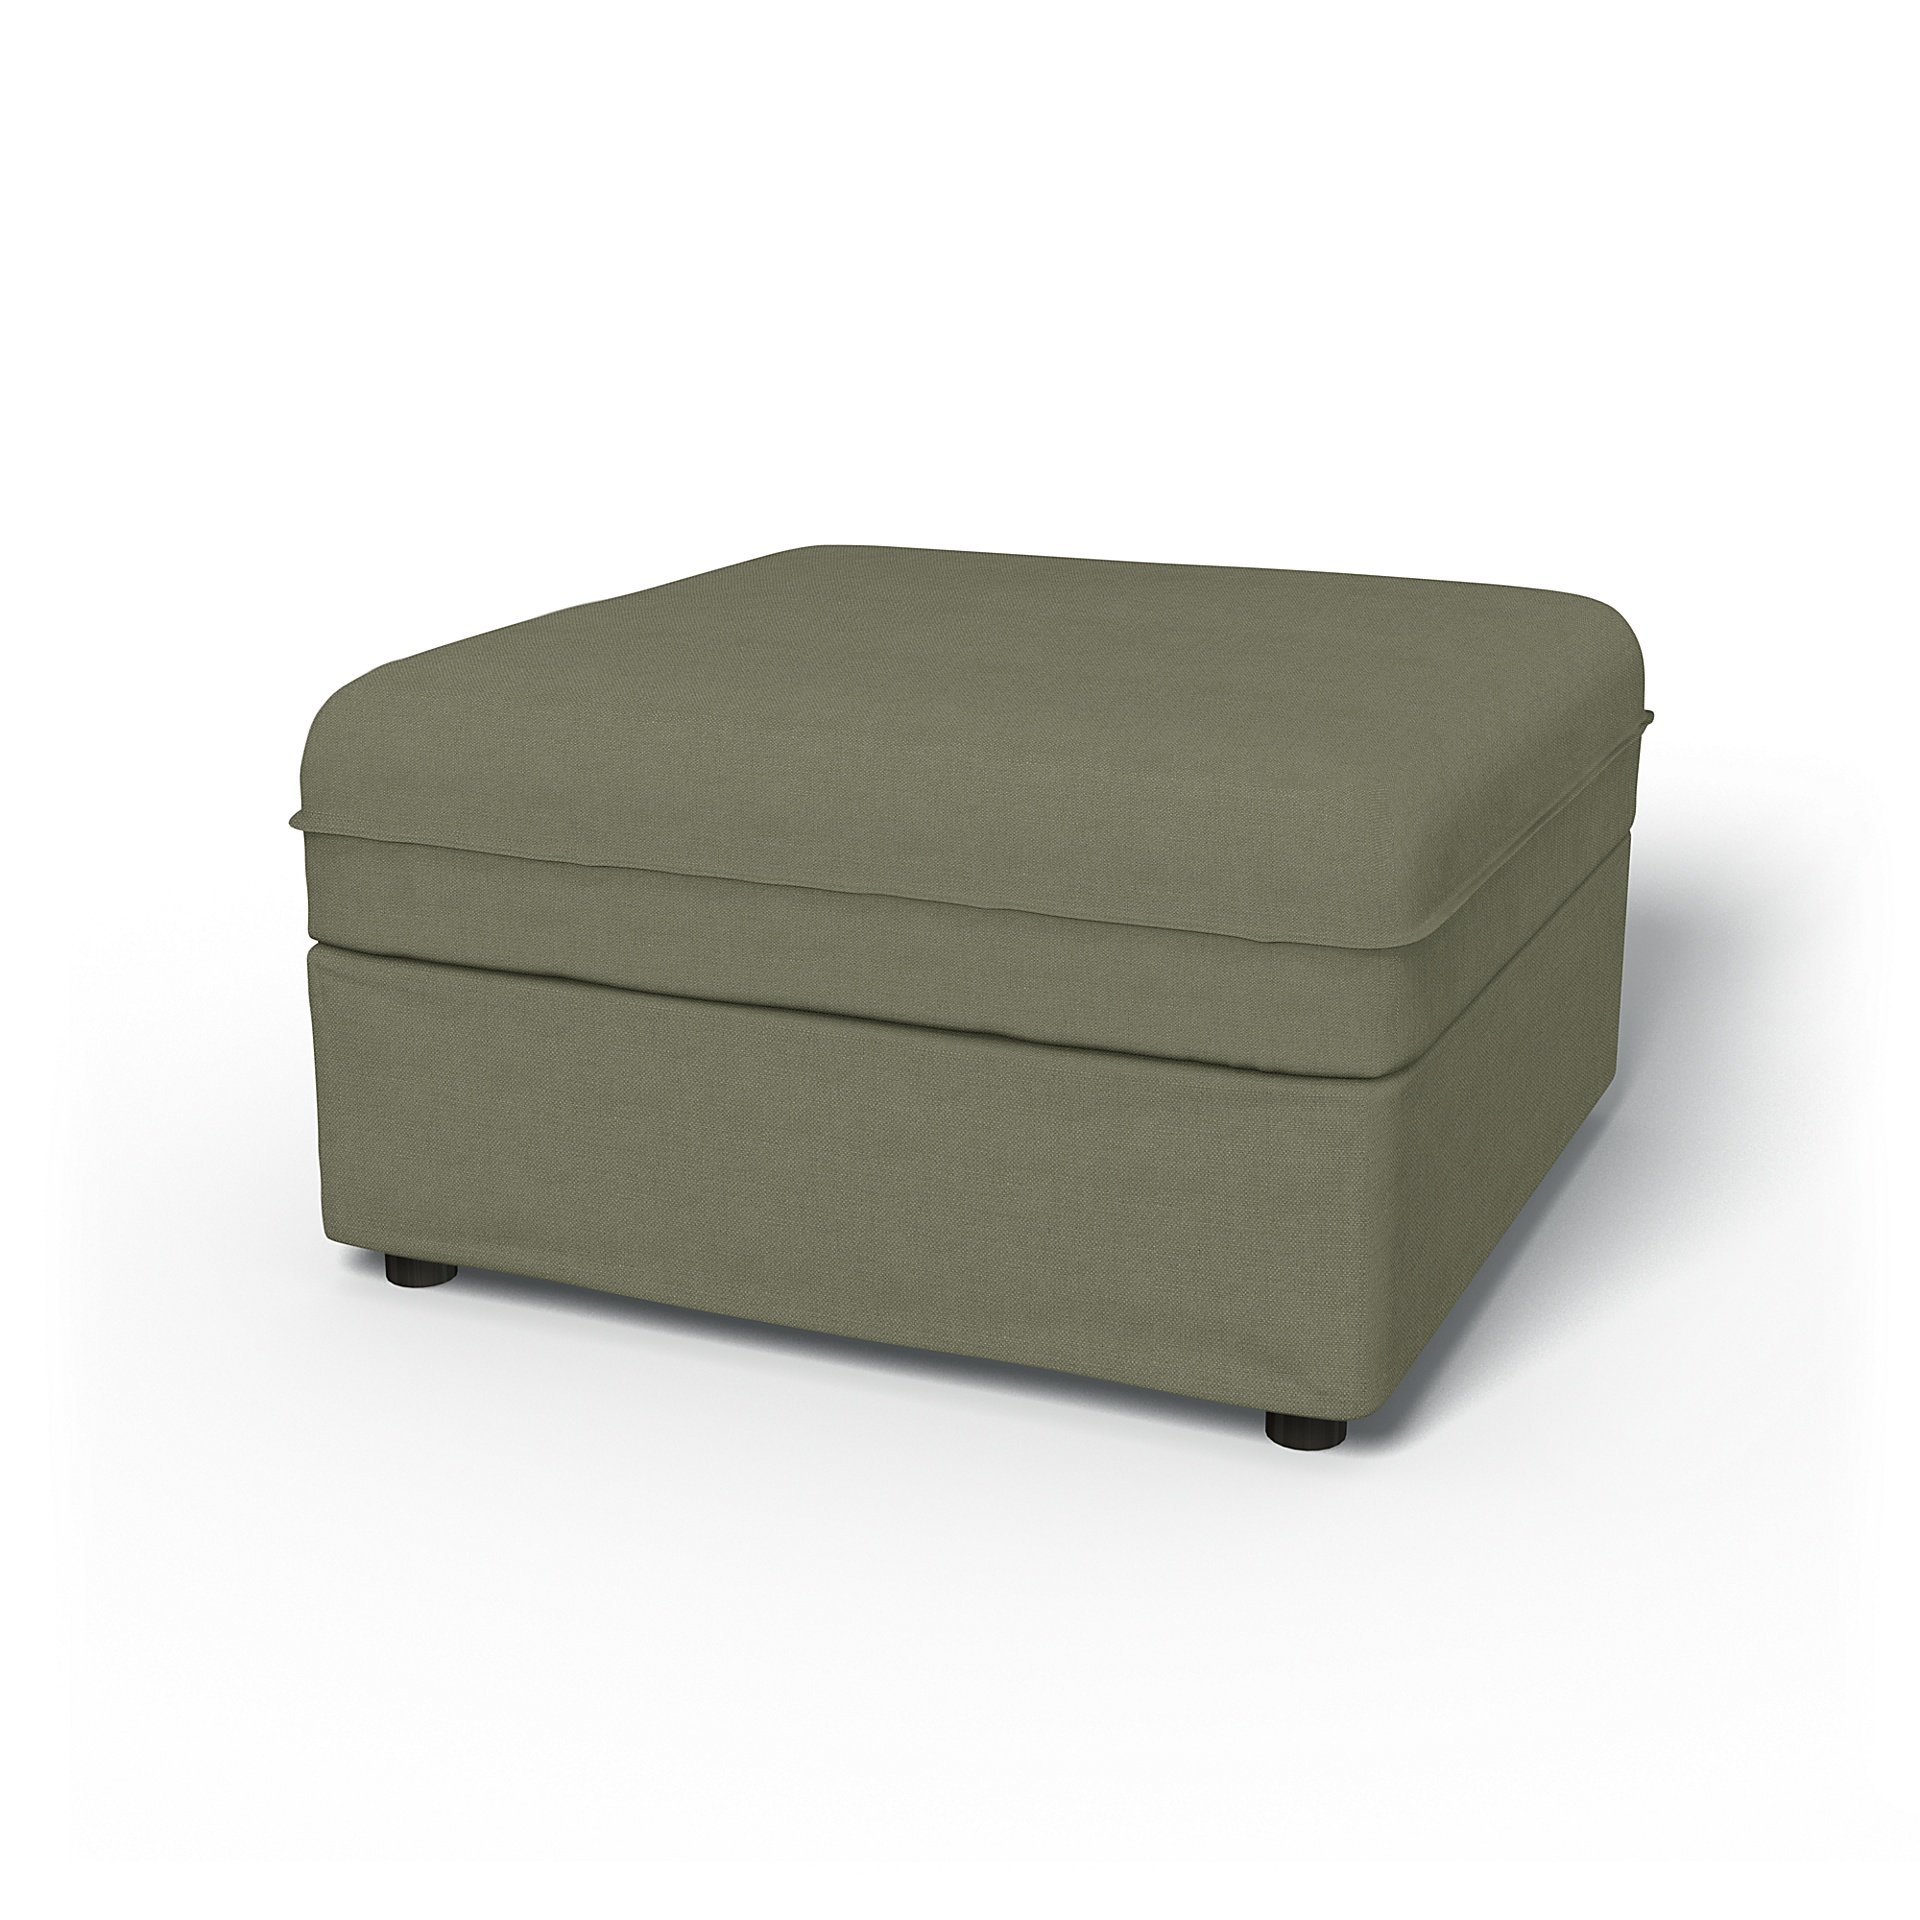 IKEA - Vallentuna Seat Module with Storage Cover 80x80cm 32x32in, Sage, Linen - Bemz